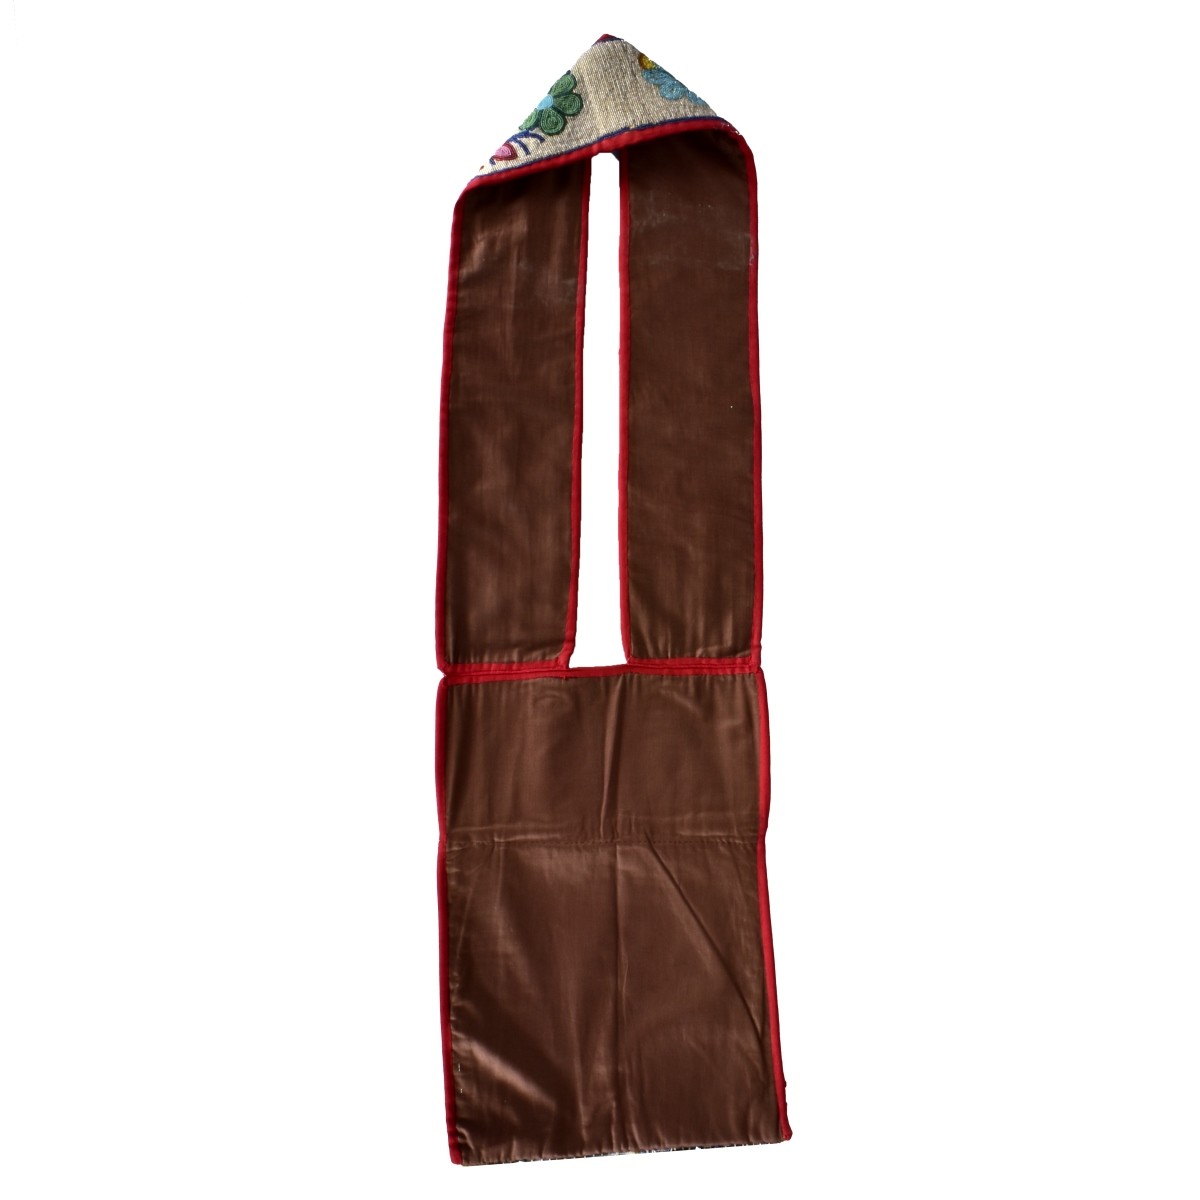 Beaded Native American Bandolier Bag